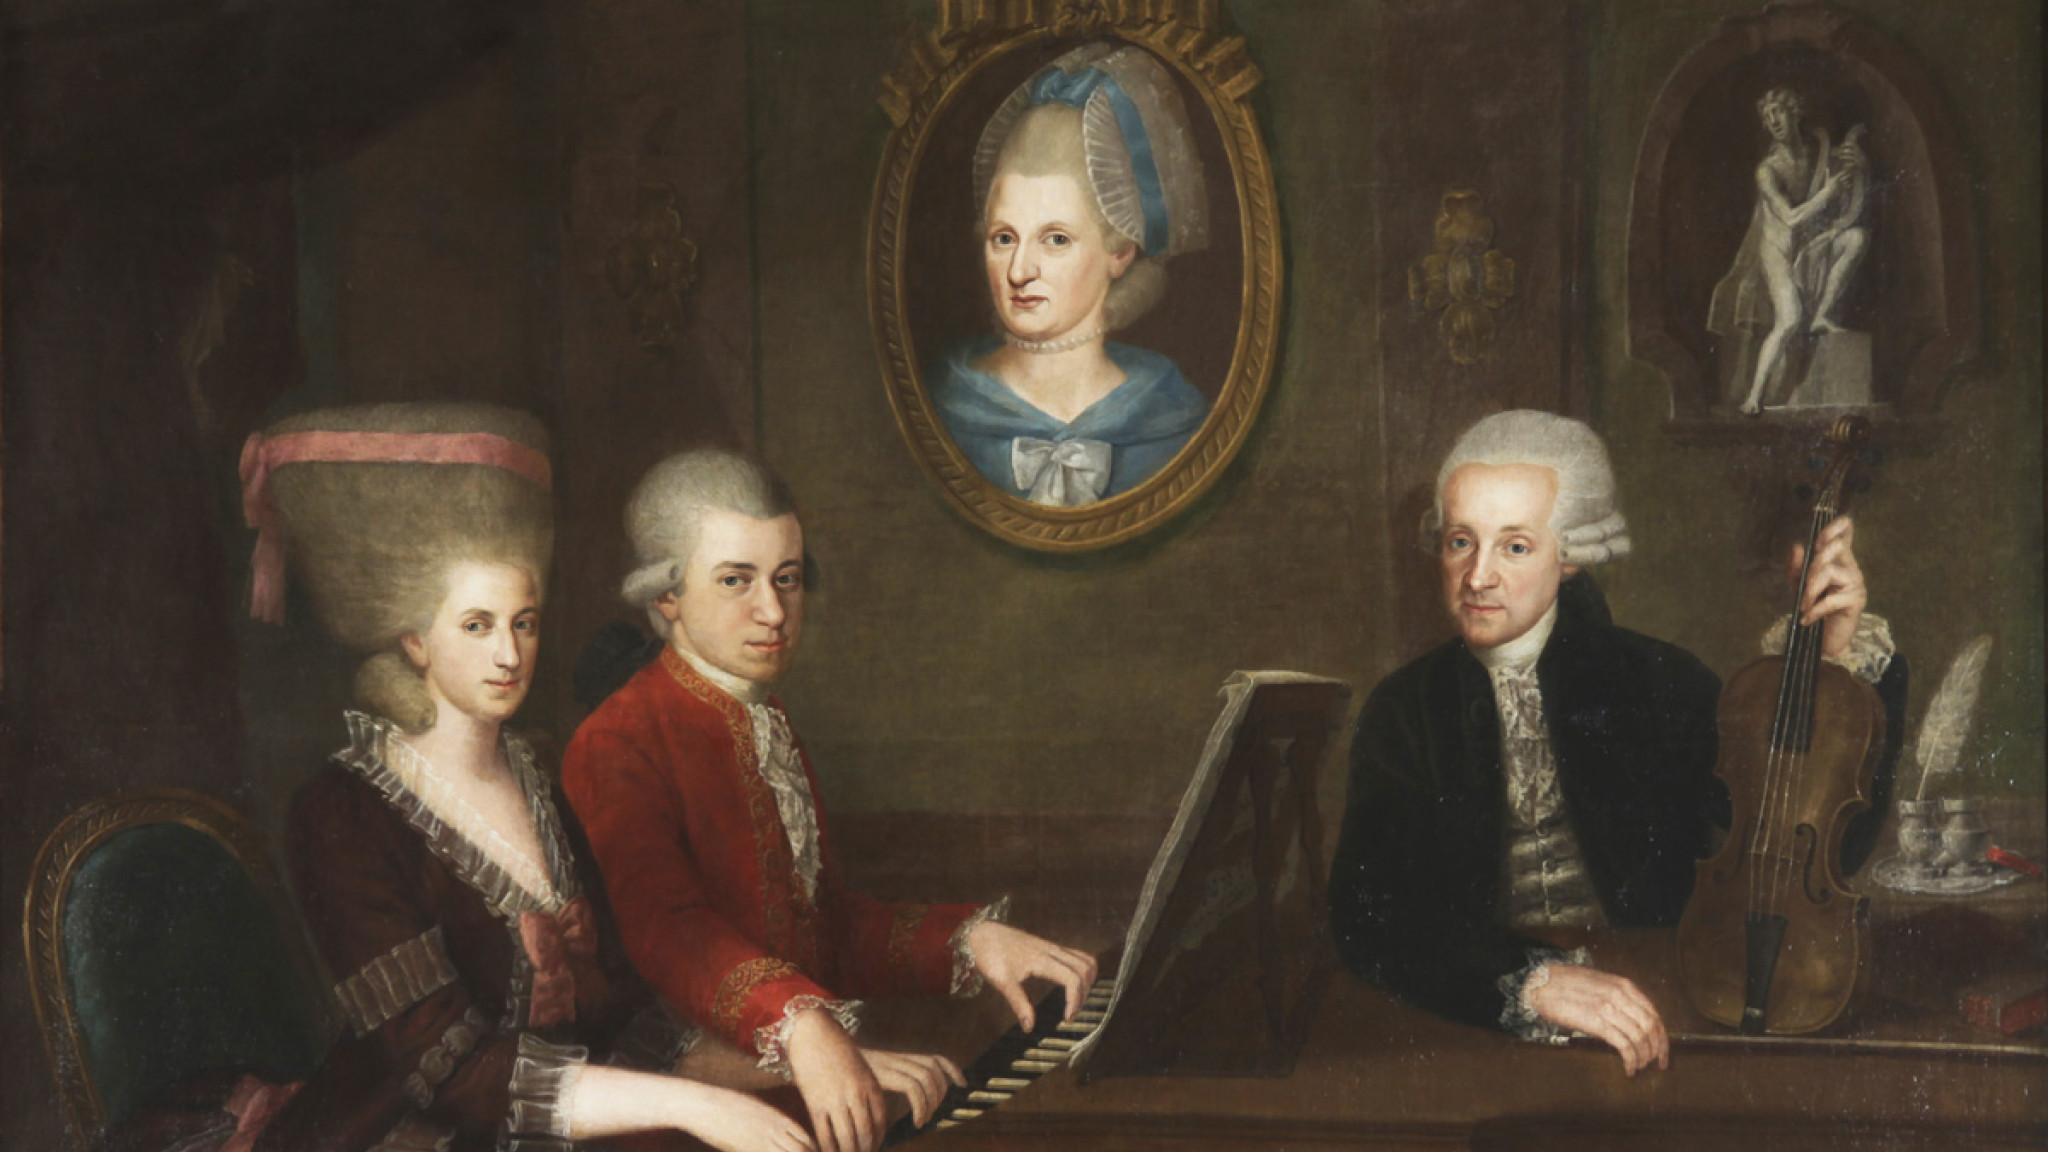 Mensch, Mozart! - 10 Fakten über Wolfgang Amadeus Mozart - Teil 3/6